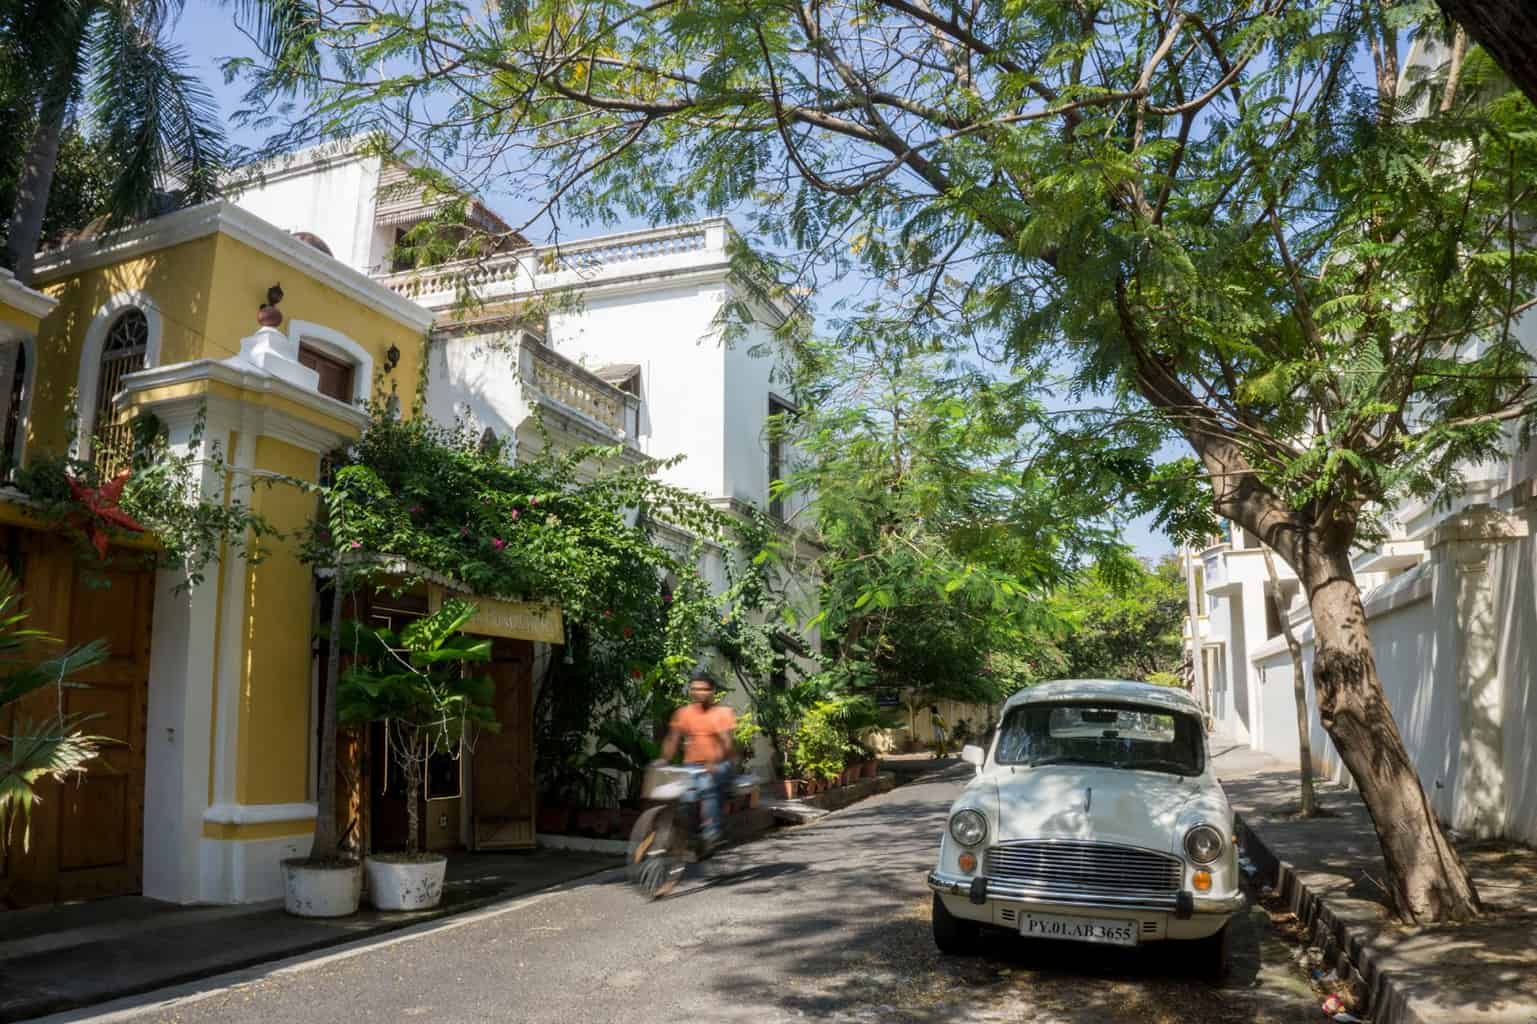 A Tour of French India | Discover Legendary City Puducherry (Pondicherry): India Tourism Documentary - YouTube